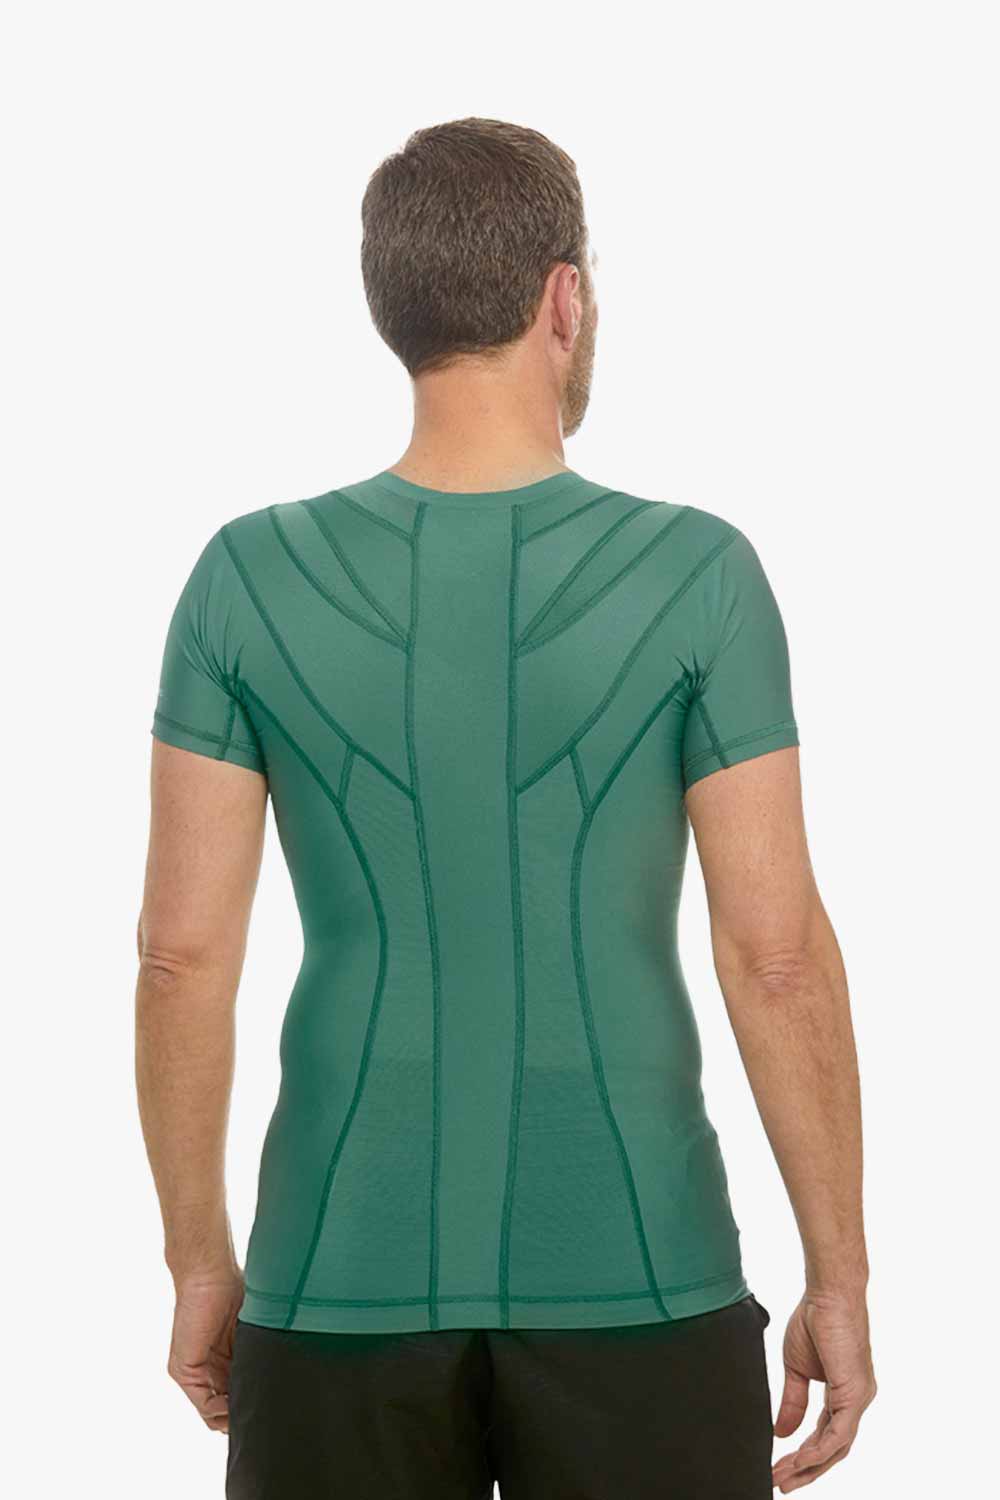 Men's Posture Shirt™ - Grün